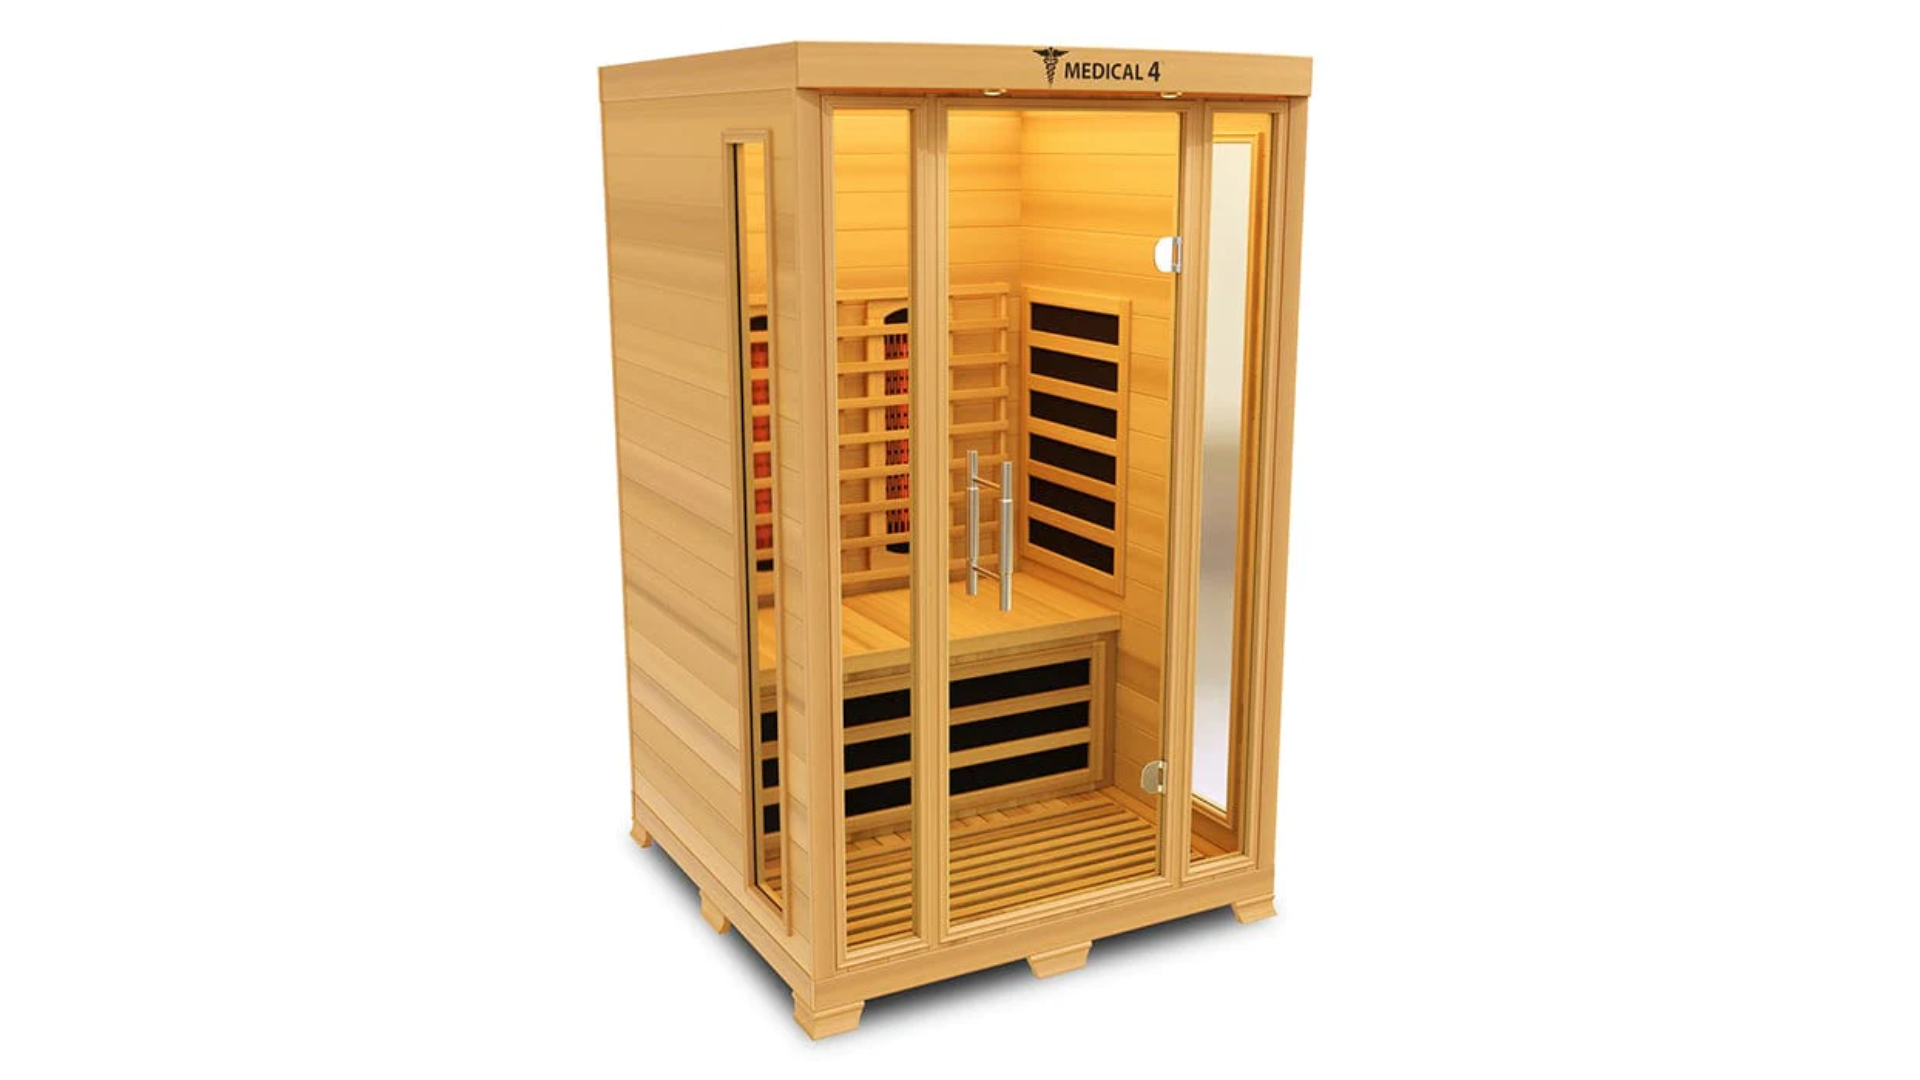 Image of the medical 4 version 2.0 full spectrum sauna.